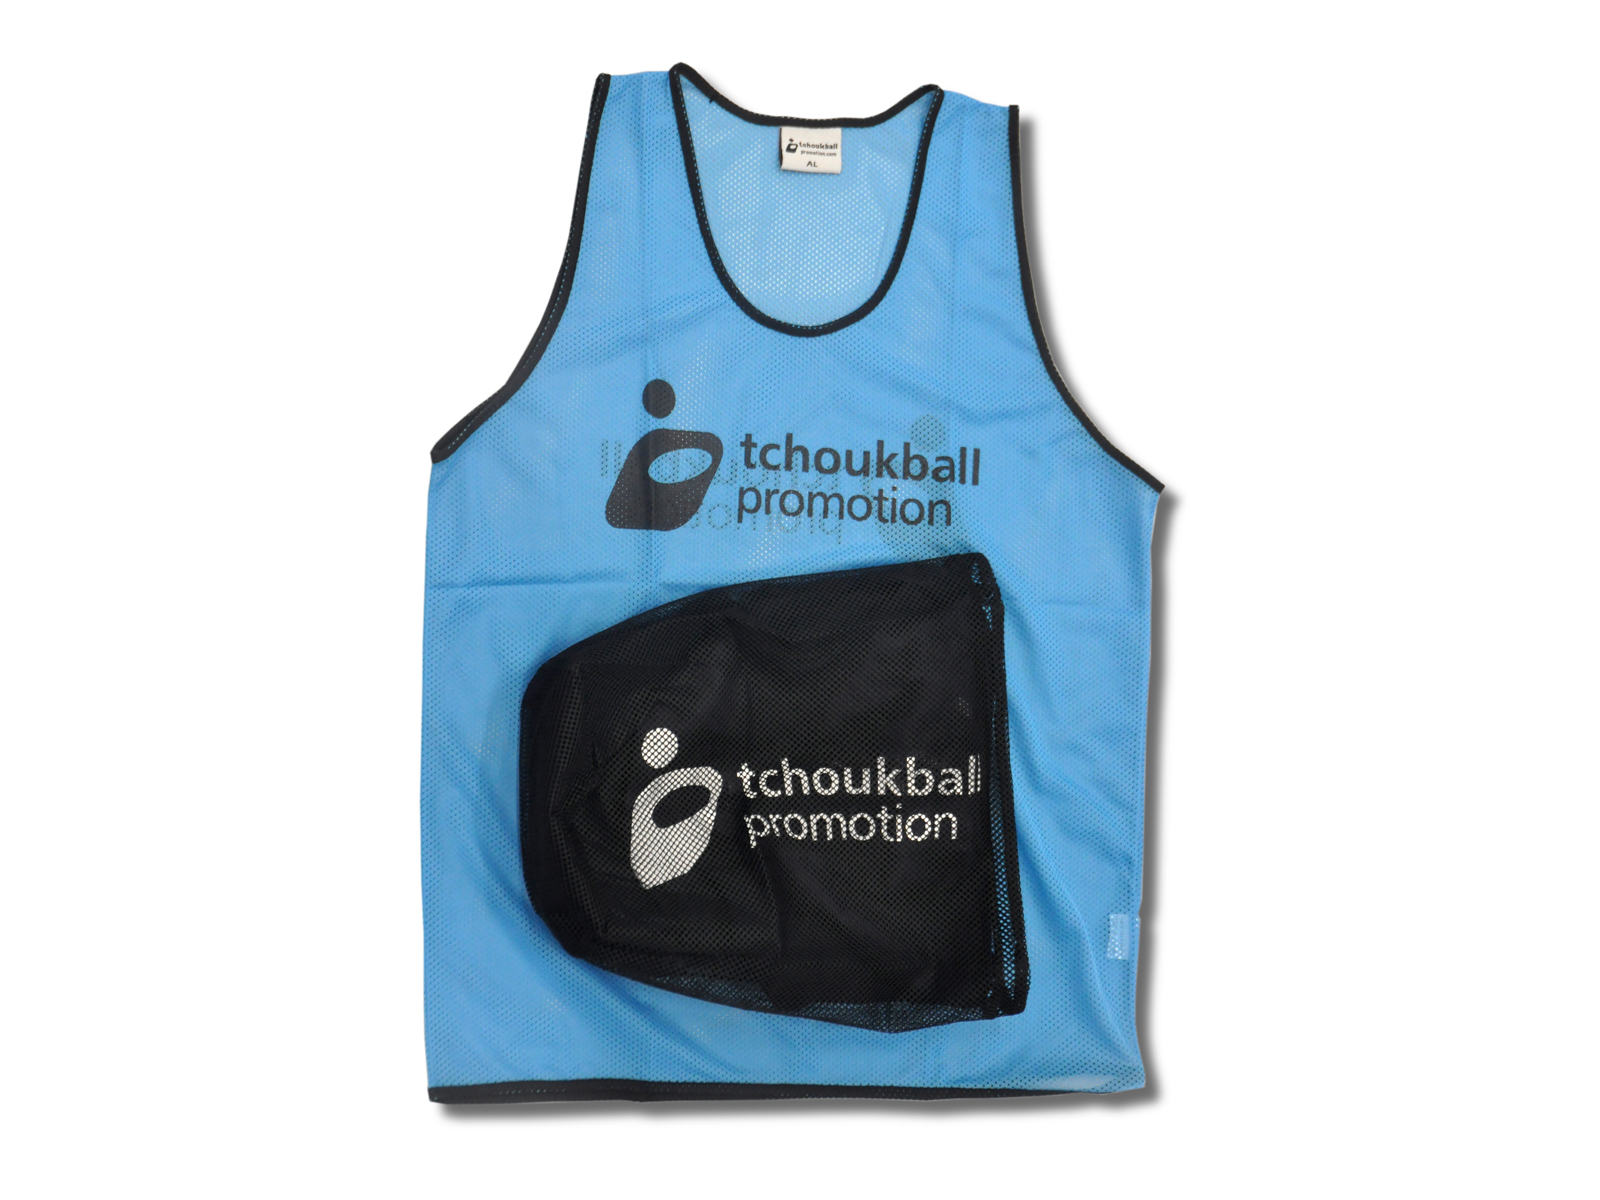 Chasuble "spécial tchoukball"